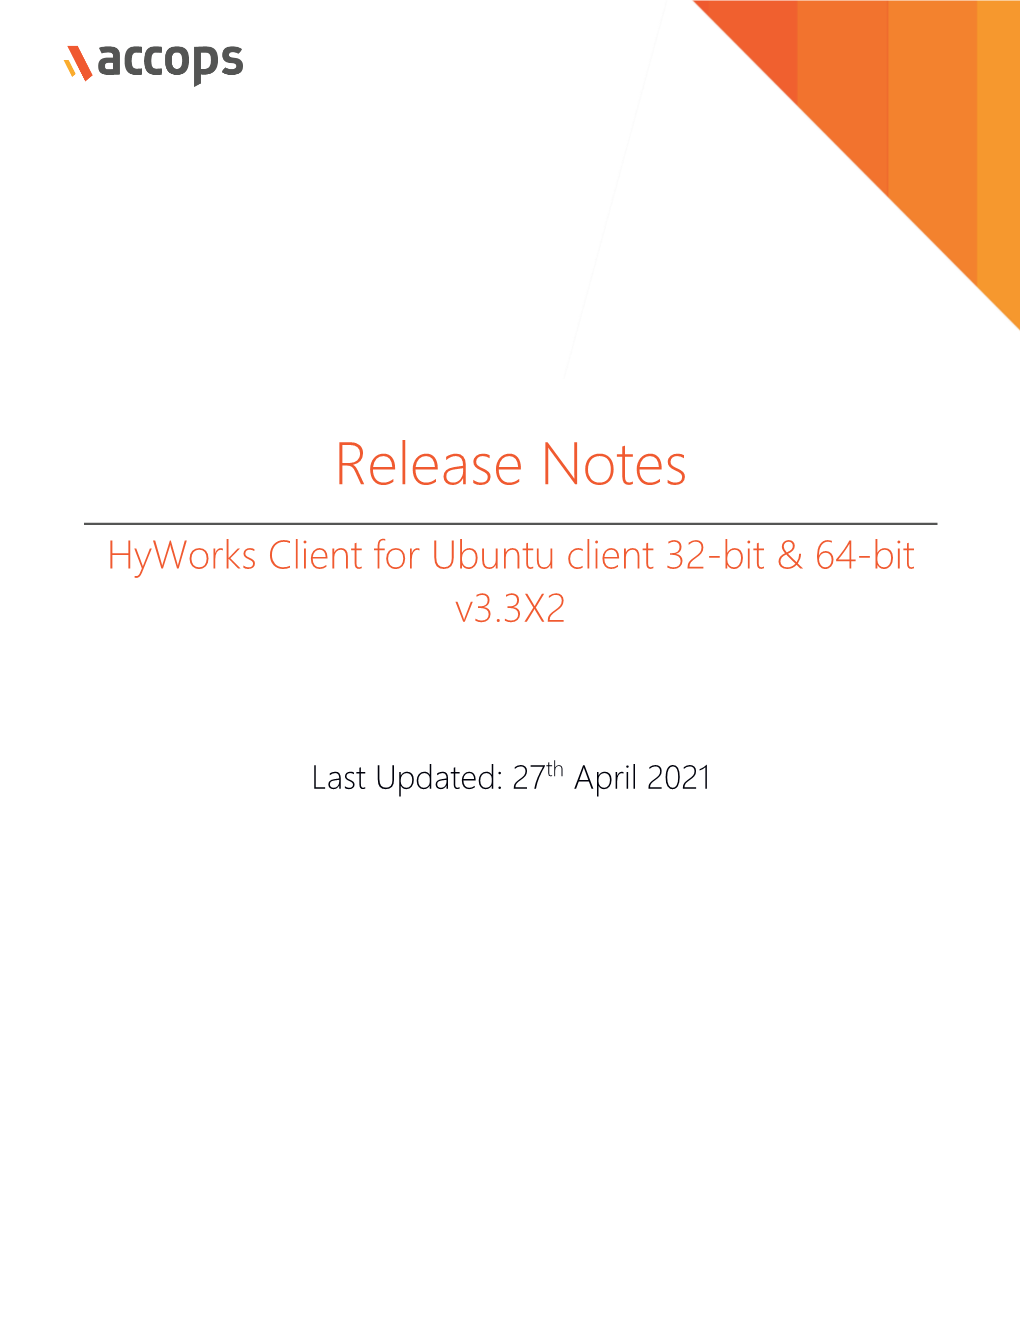 Hyworks Client for Ubuntu Client 32-Bit & 64-Bit V3.3X2